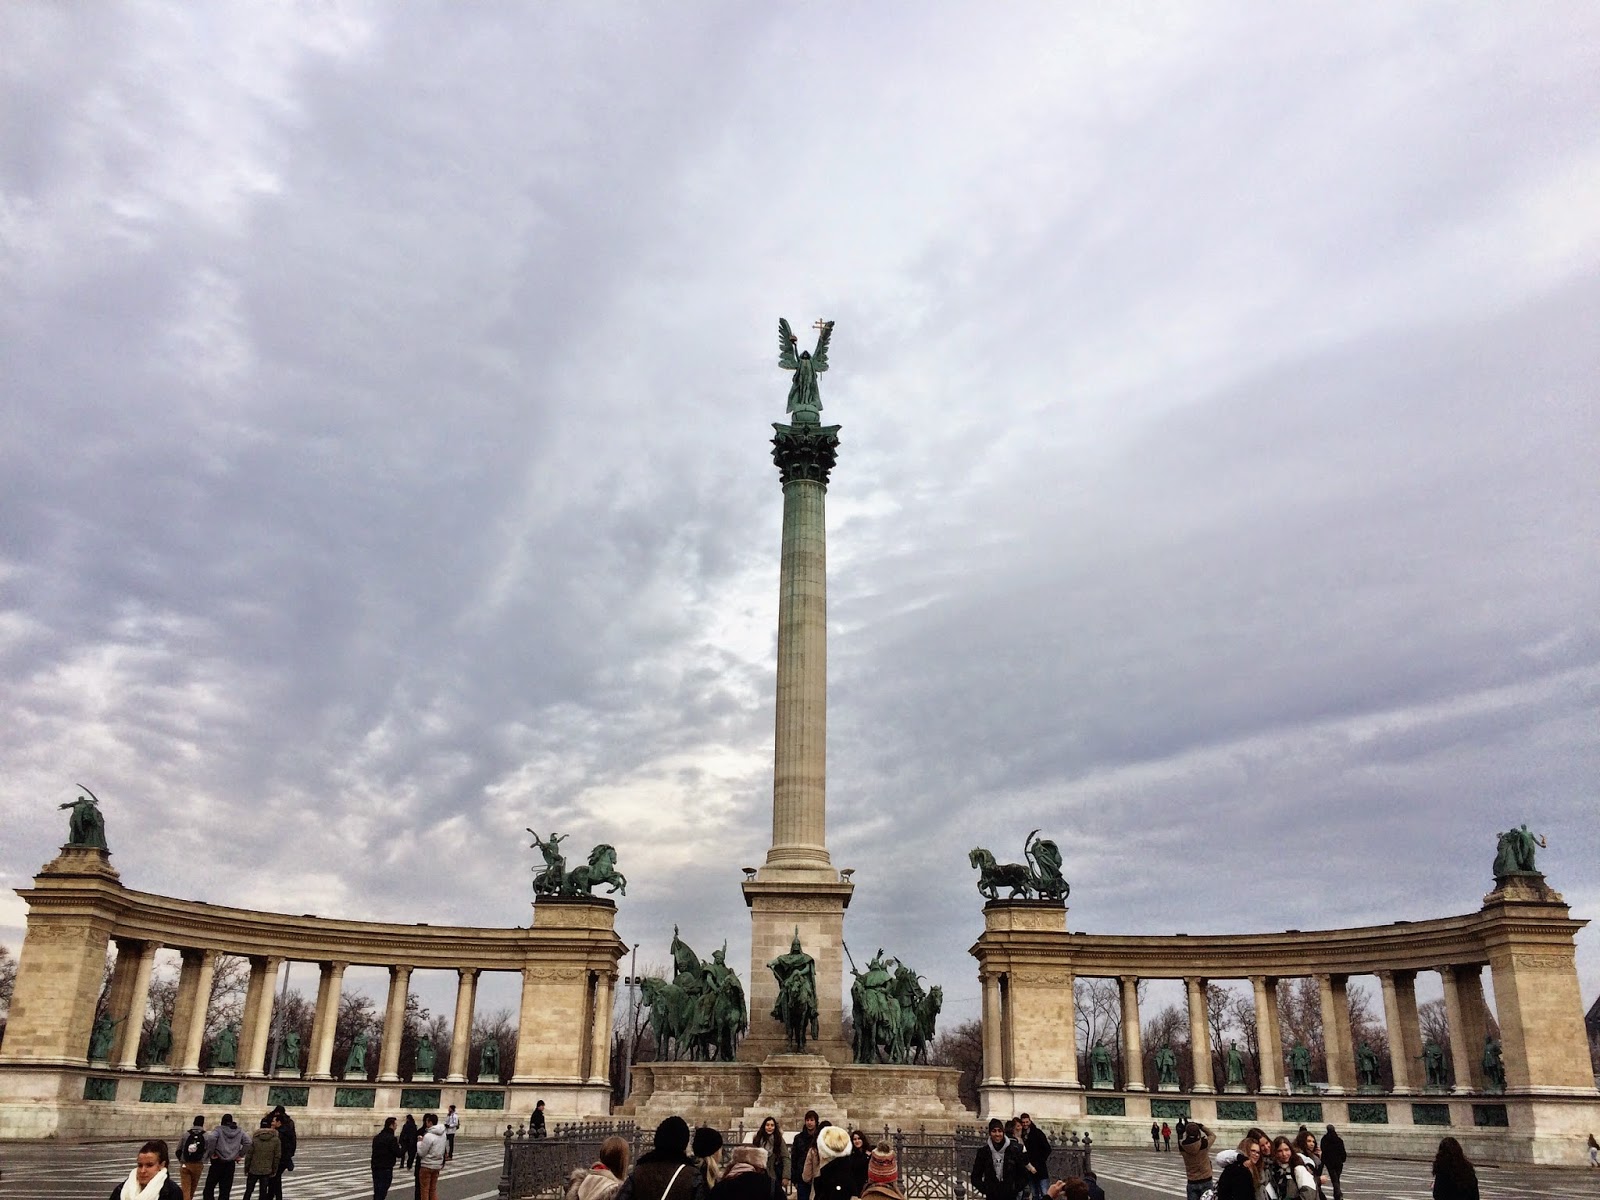 Hero's Square (Hősök tere) - Budapest